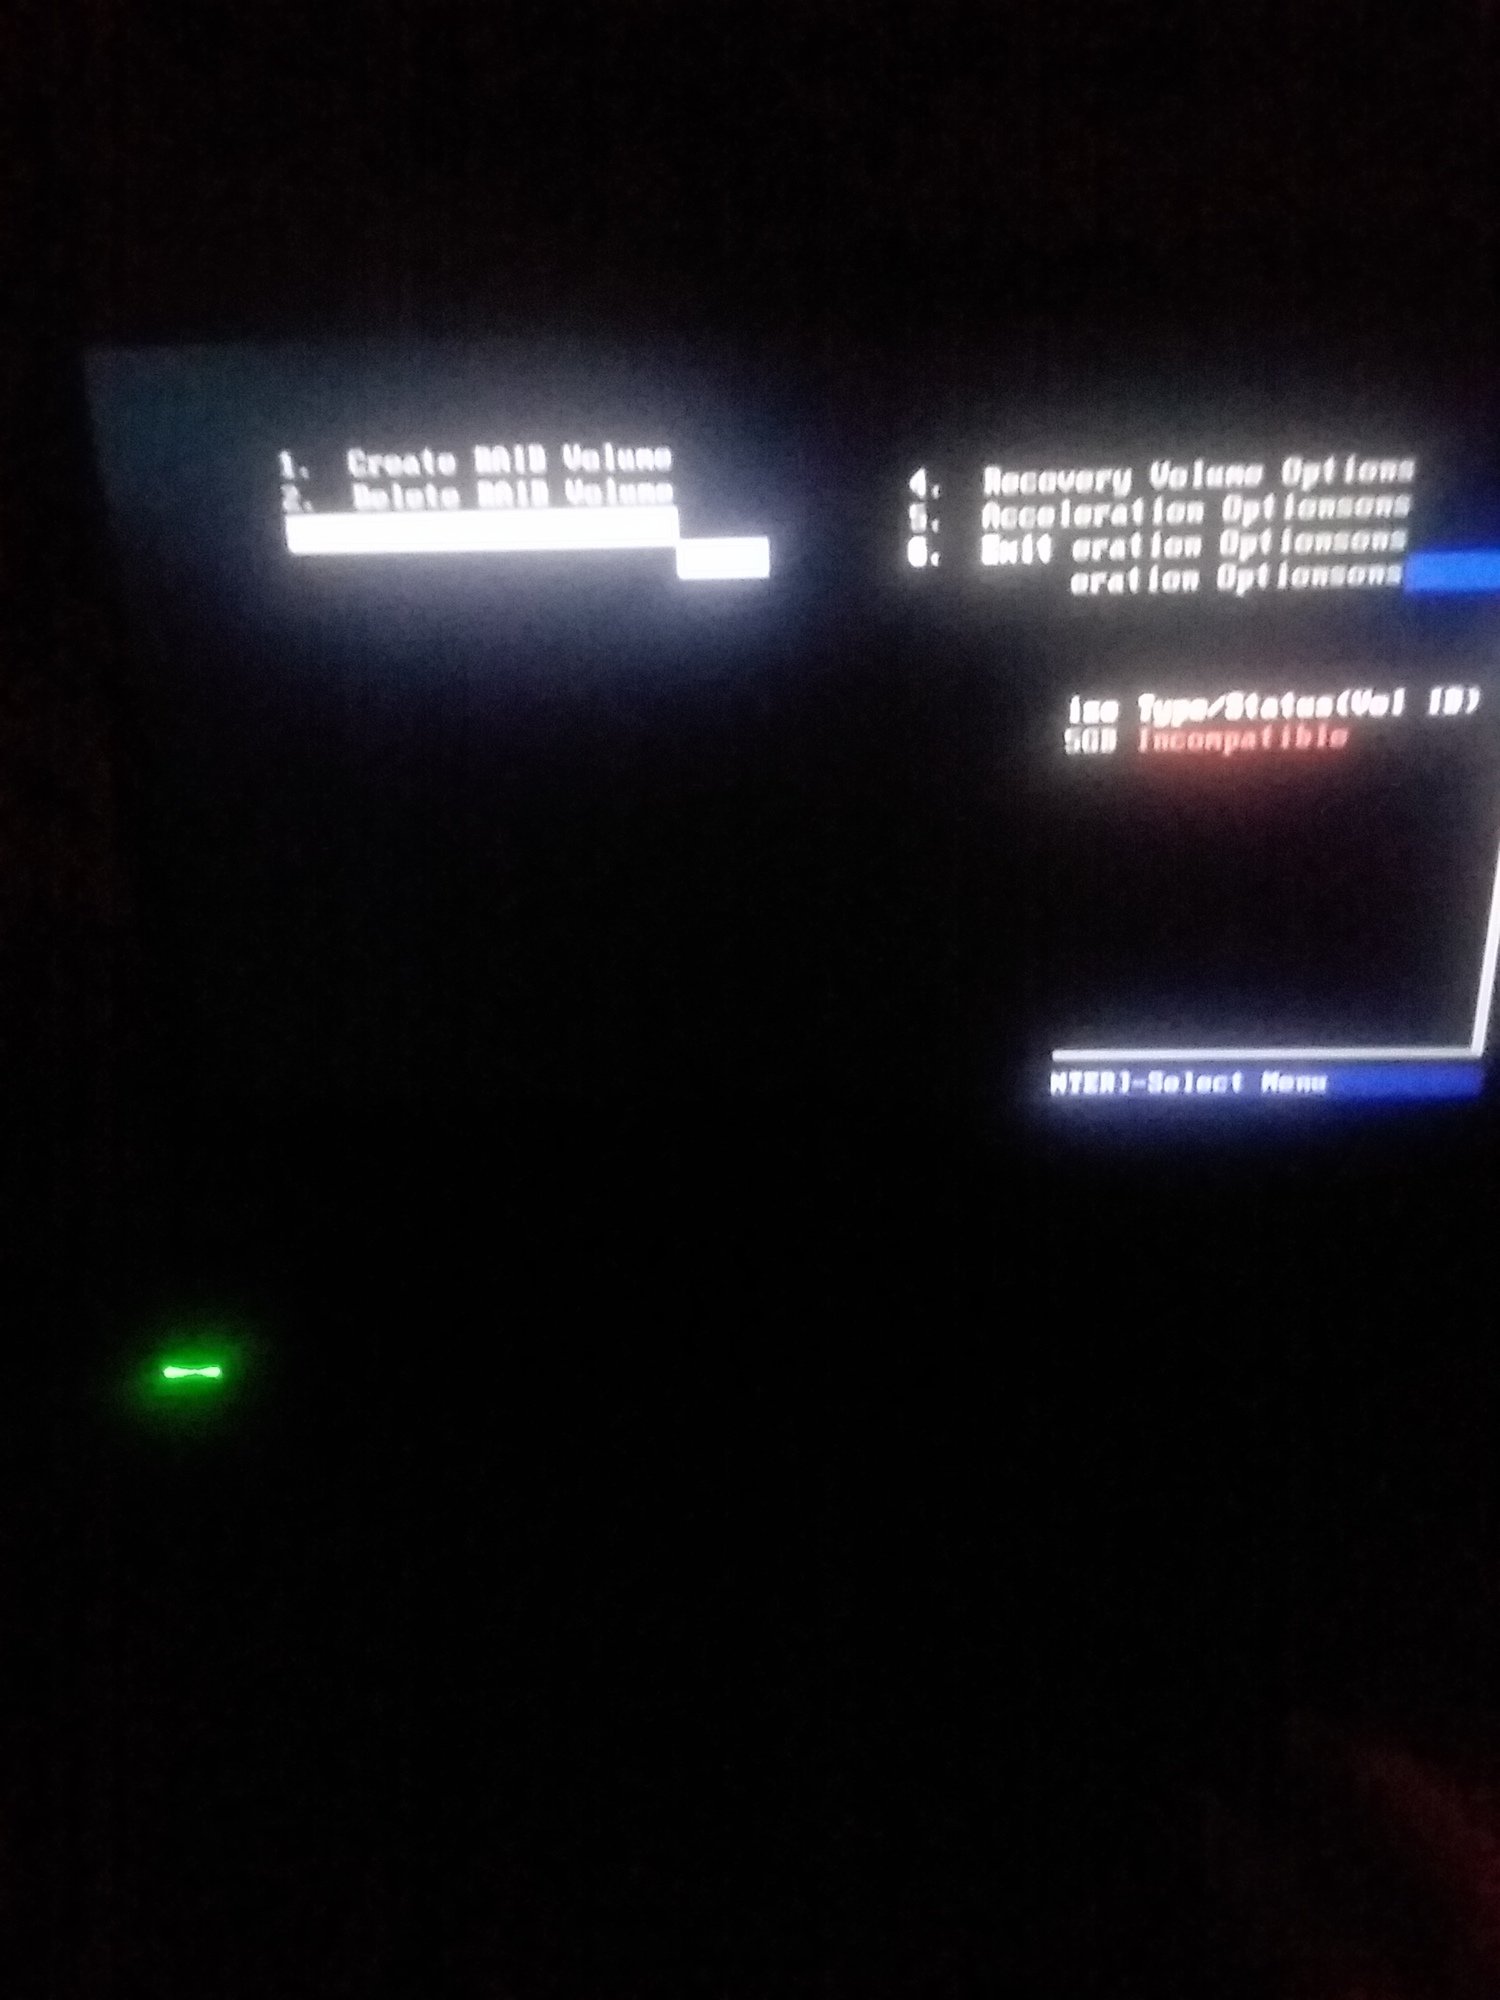 Raid Utility screen is broken acc4ce37-3eec-45ca-938b-3b7aaa989458?upload=true.jpg